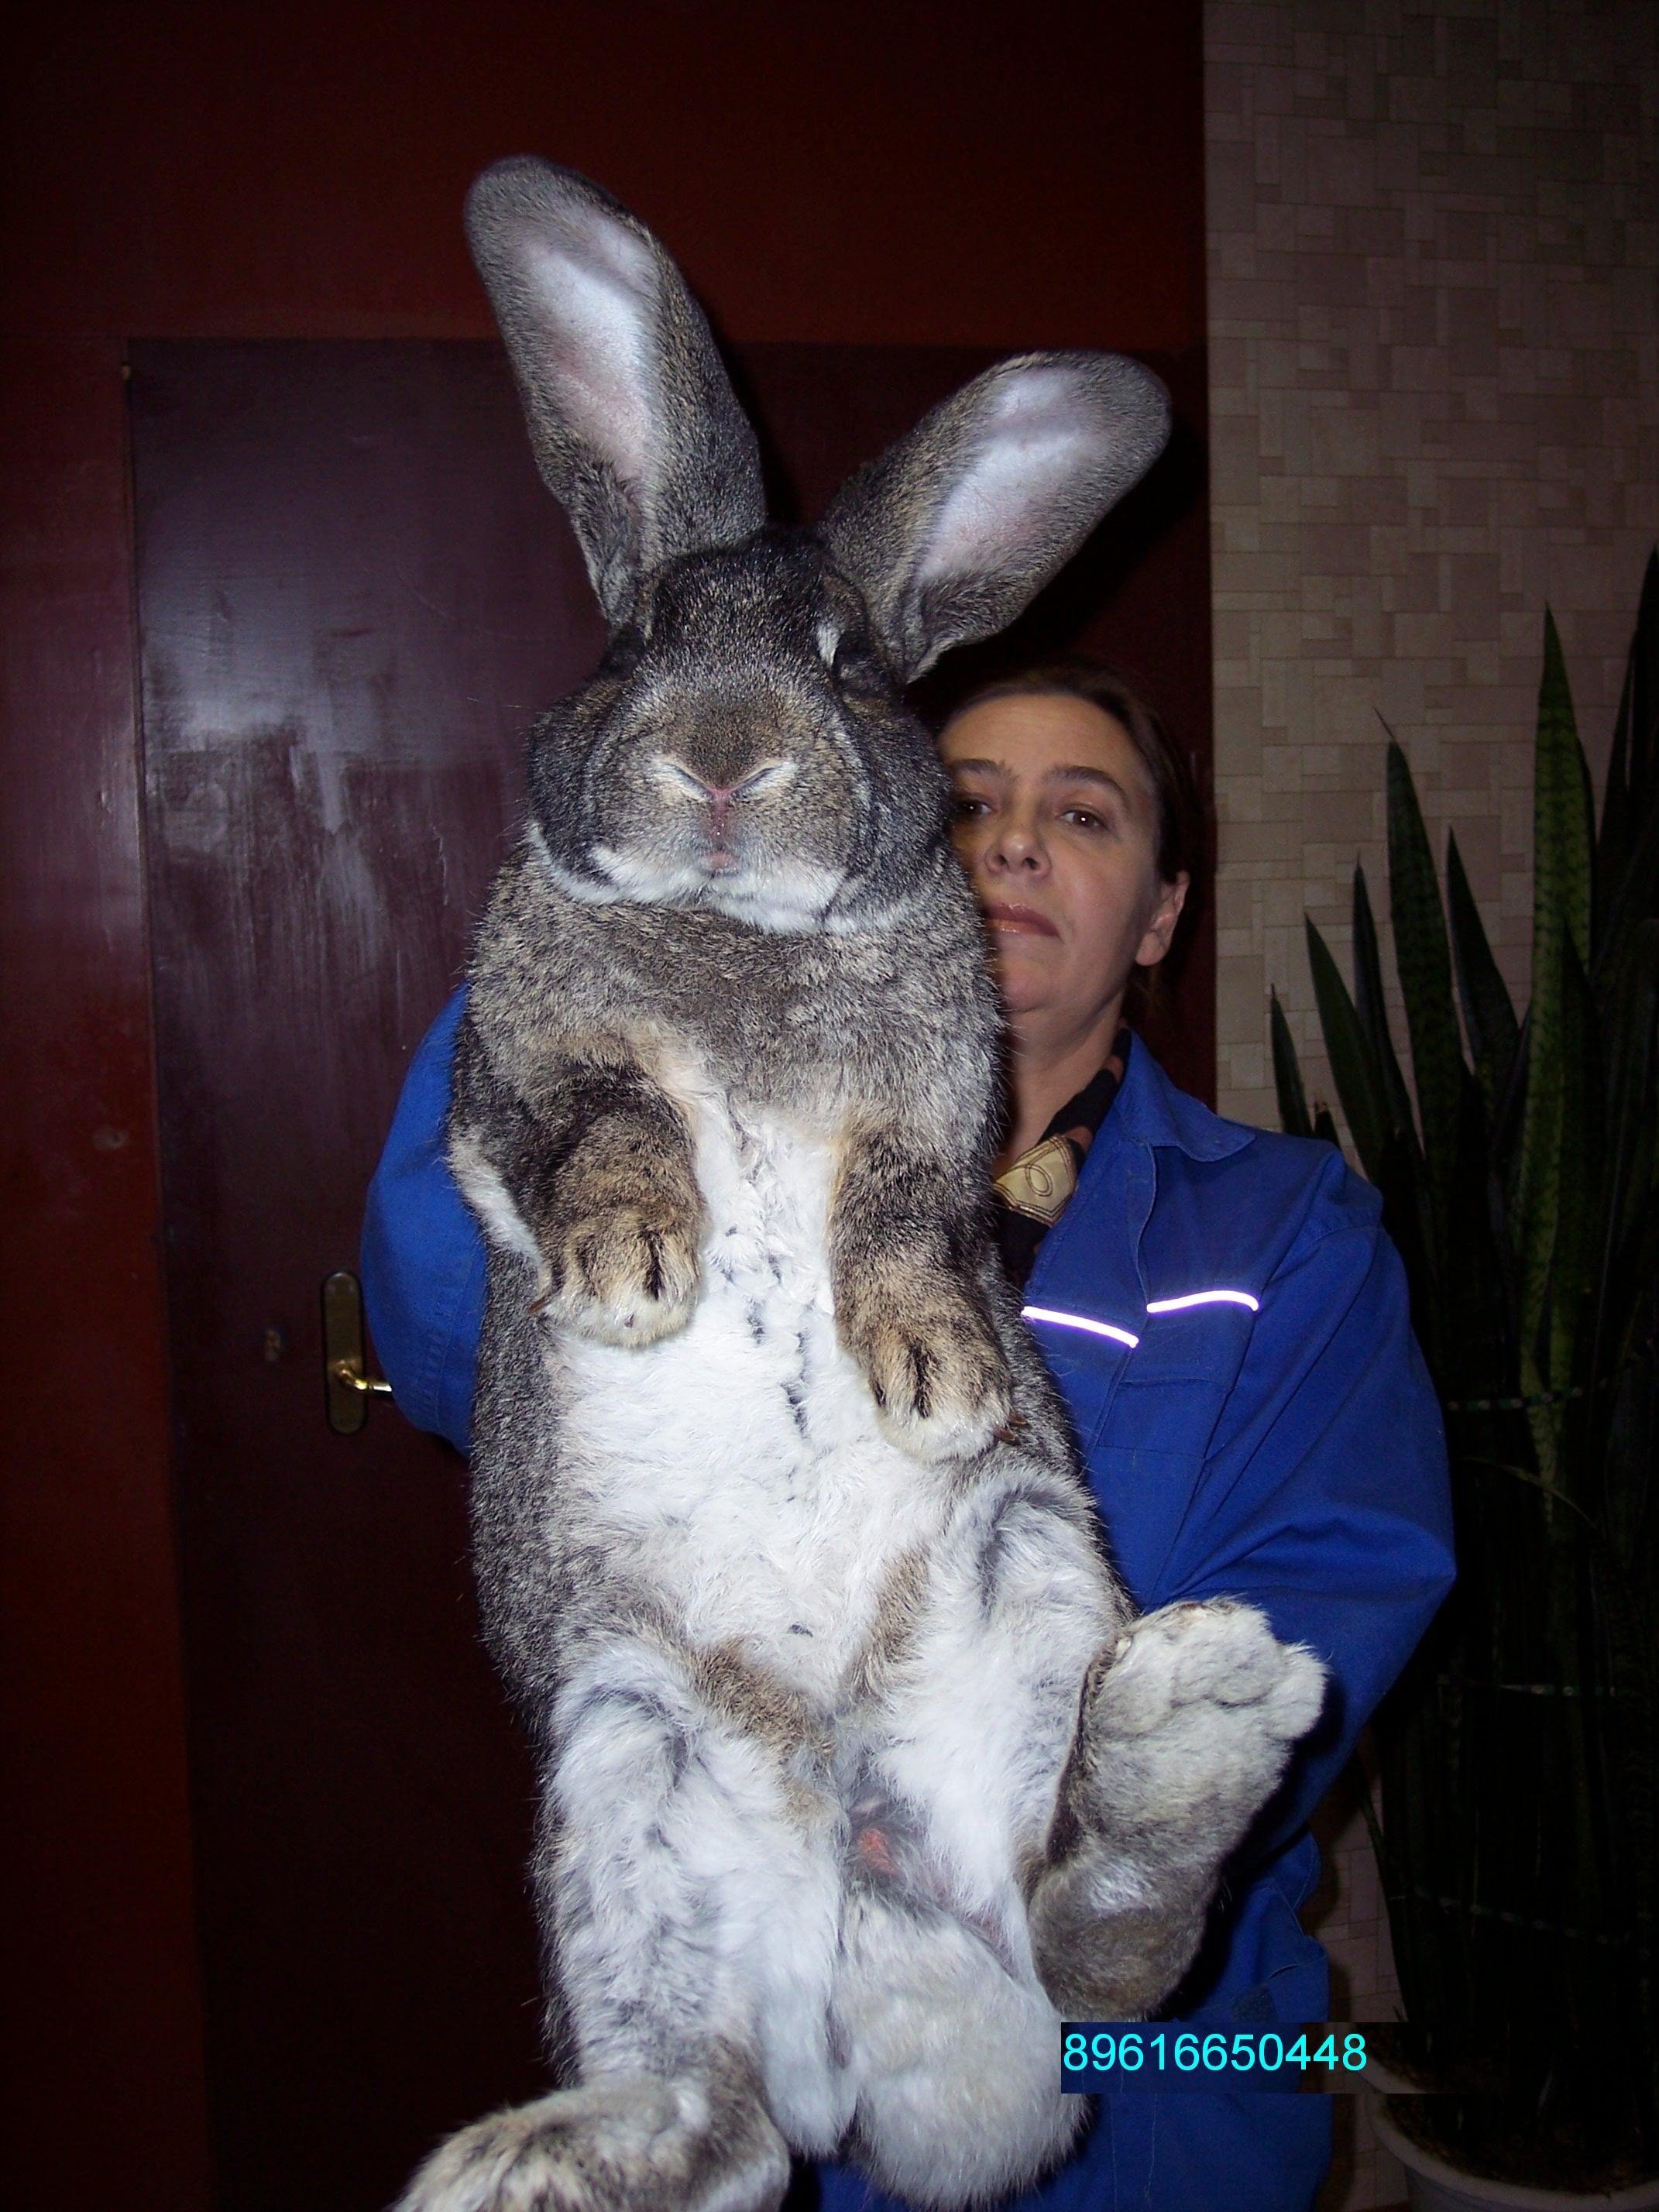 Быстрый рост кролика. Бельгийский Фландр кролик. Кролики великаны Фландр. Бельгийский великан Фландр. Бельгийский великан кролик.